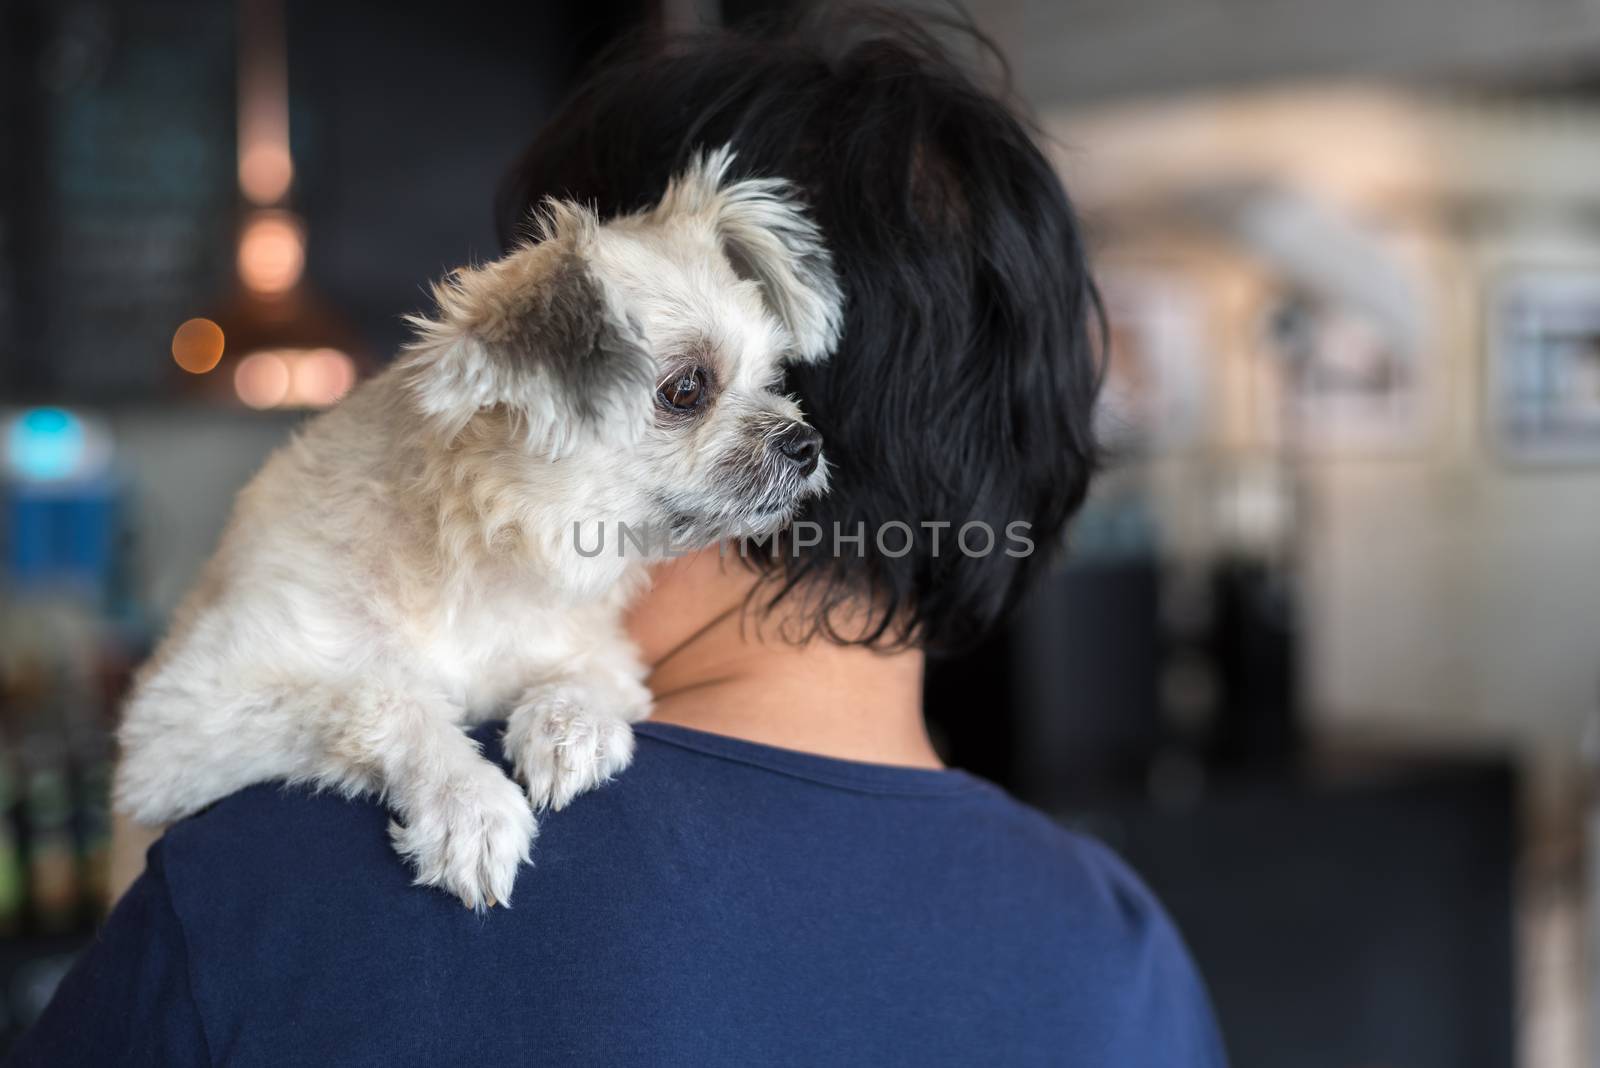 Asian woman hugging dog so cute at coffee shop by PongMoji